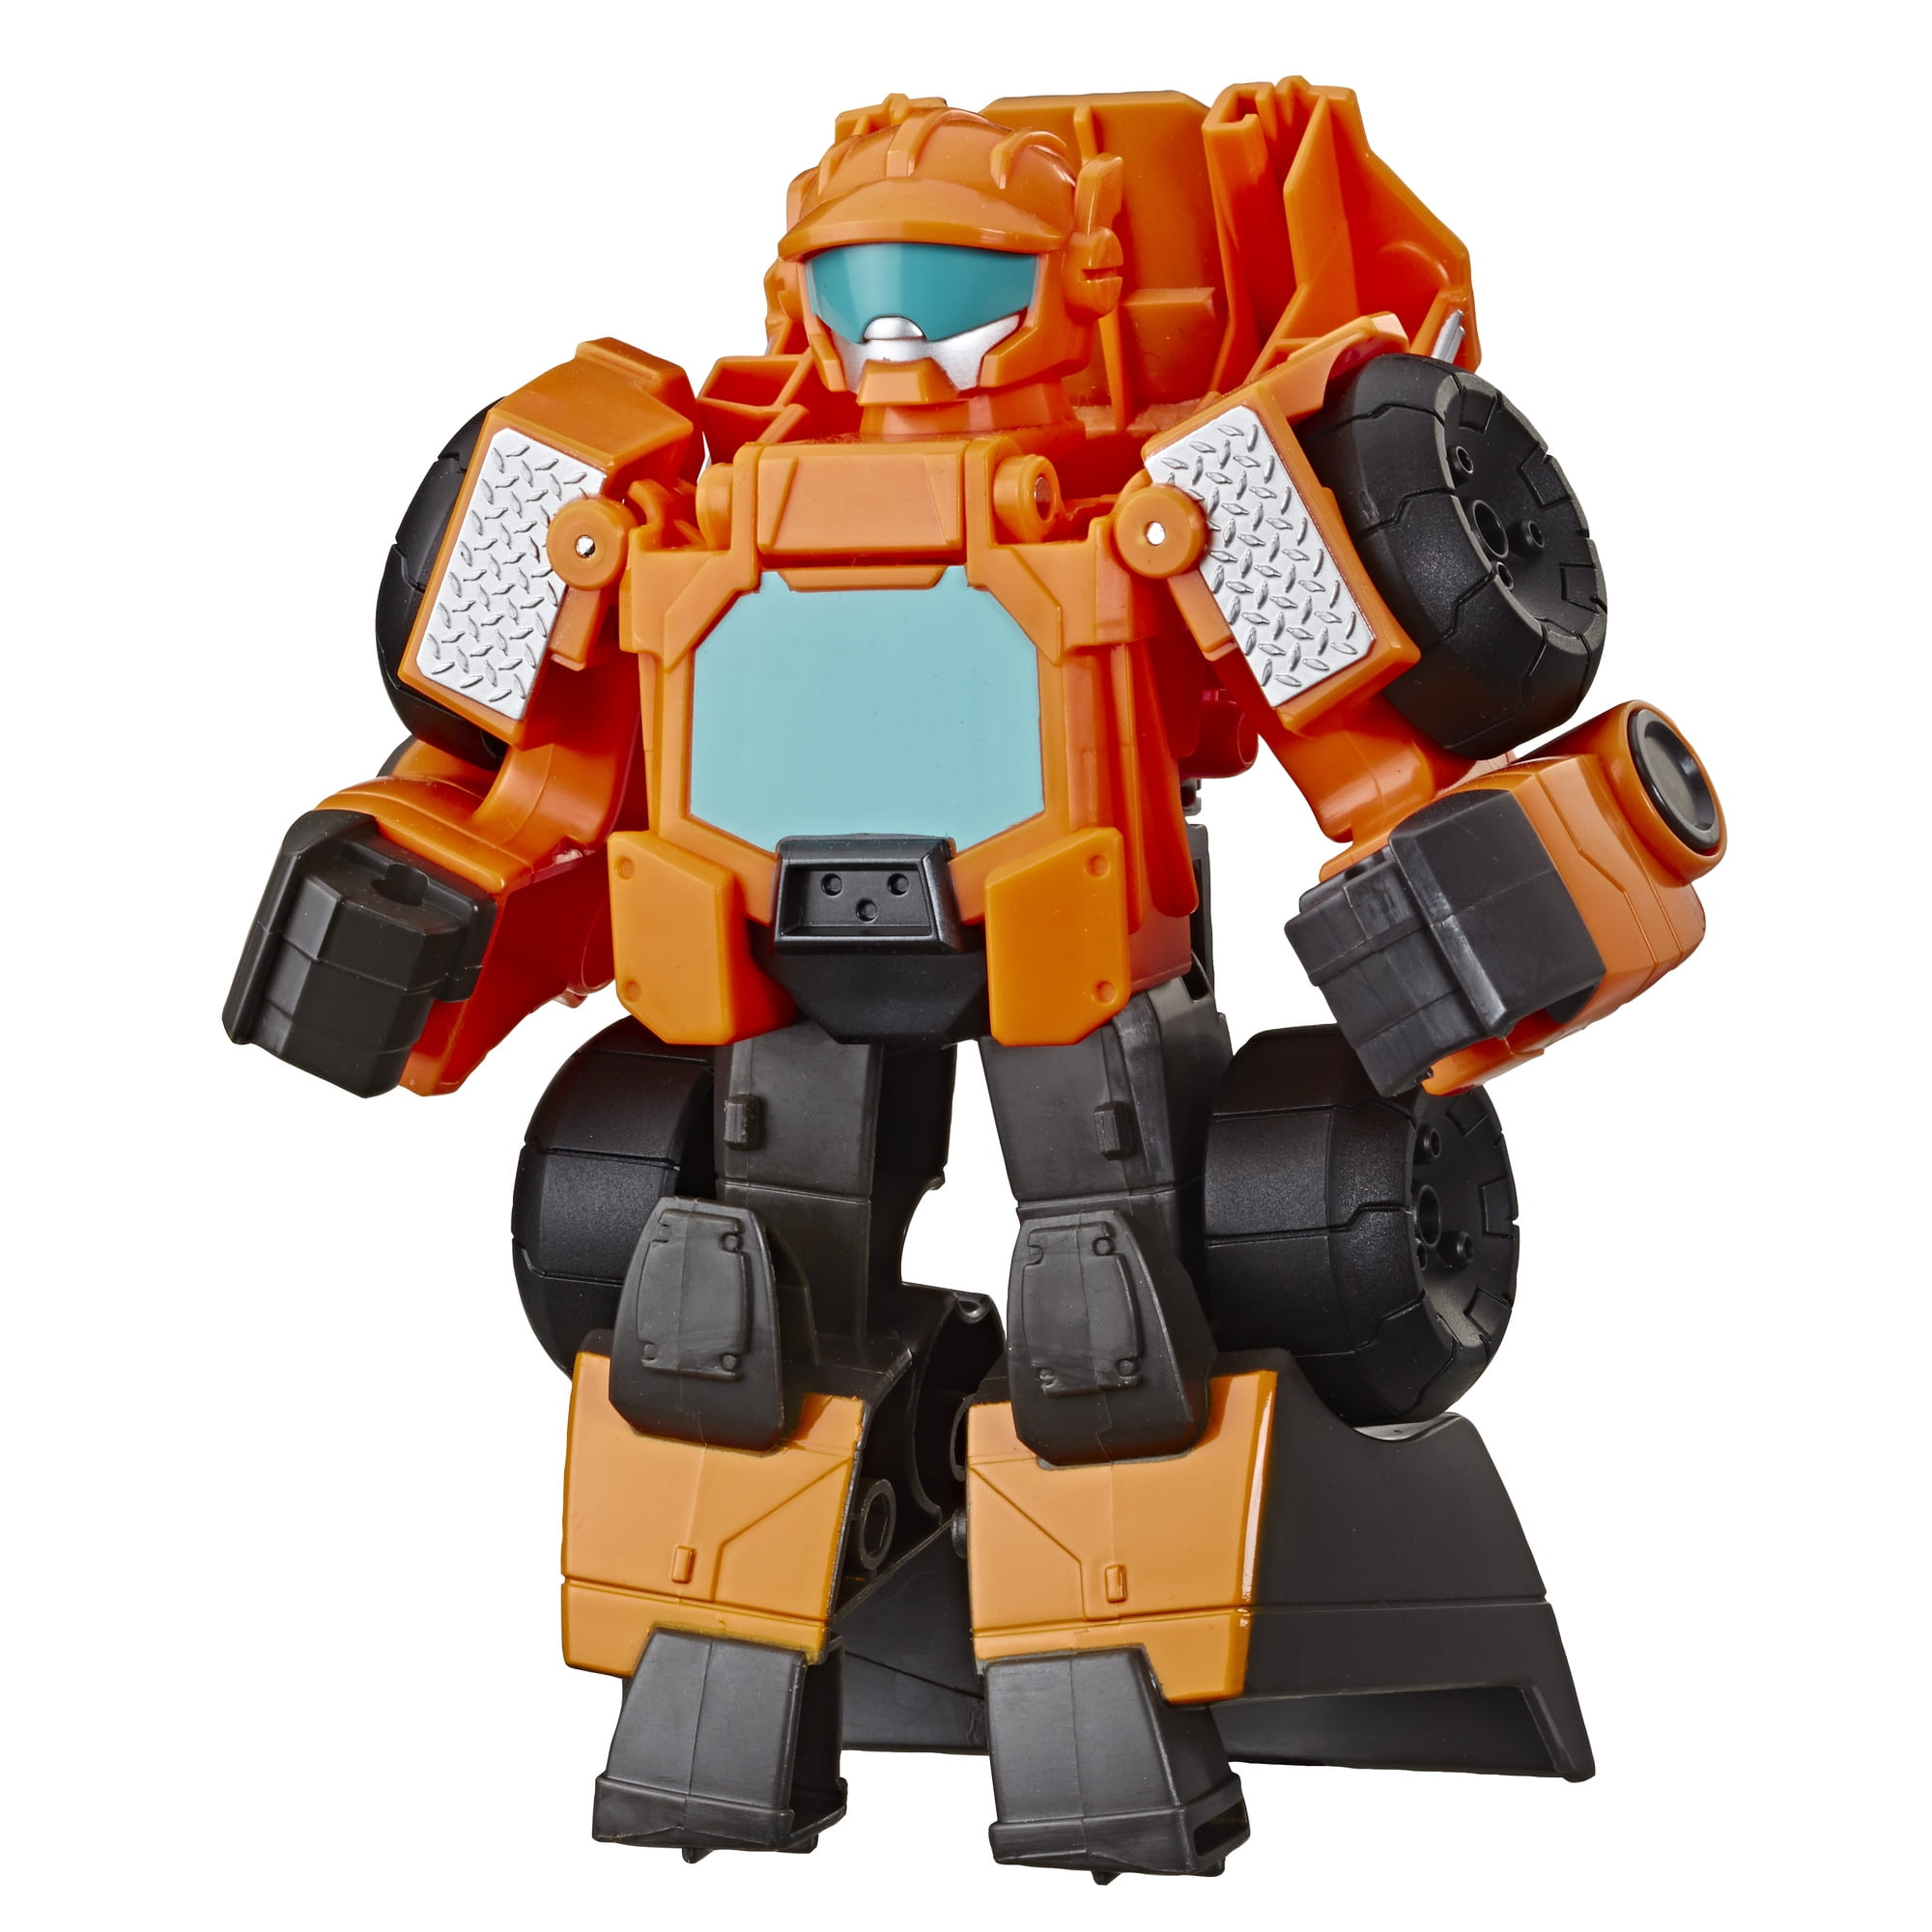 Playskool Heroes Transformers Rescue Bots Academy Boulder Constructionbot B4602 for sale online 